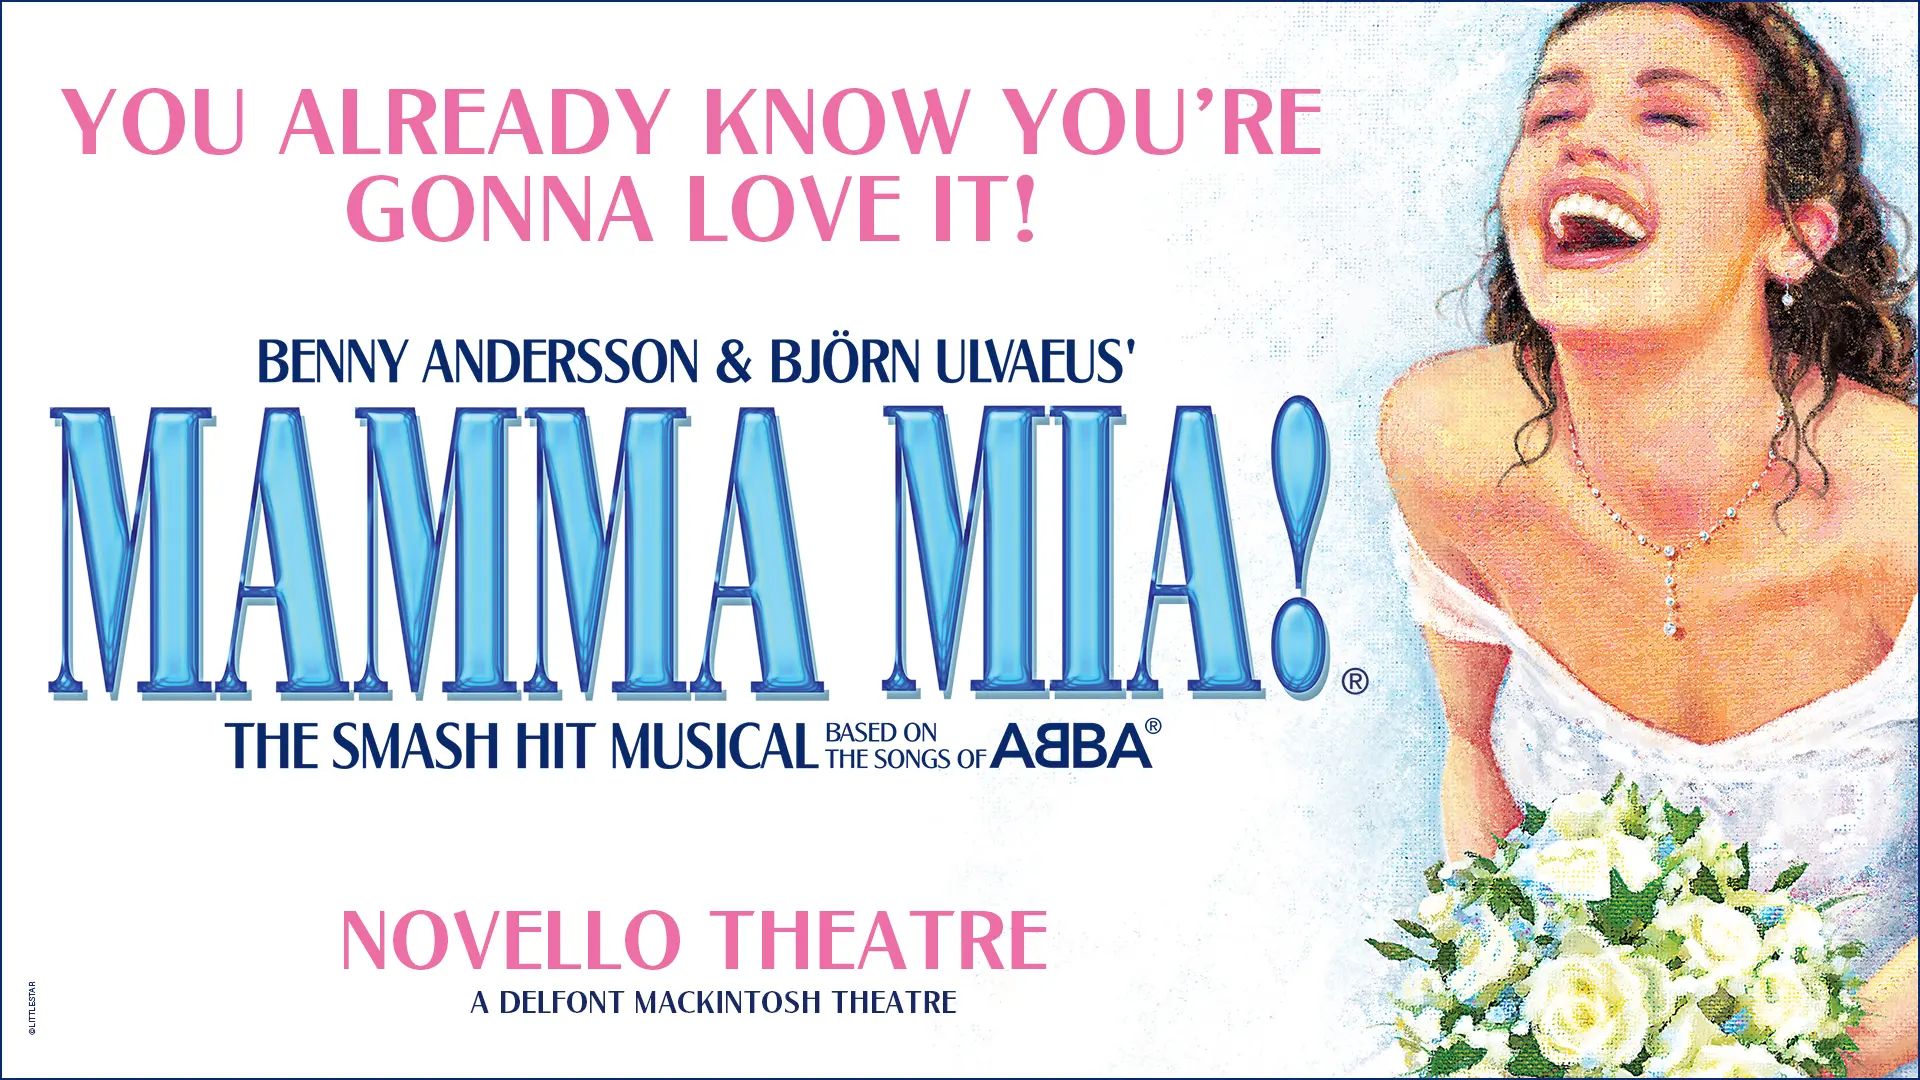 MAMMA MIA! at Novello Theatre in London's West End